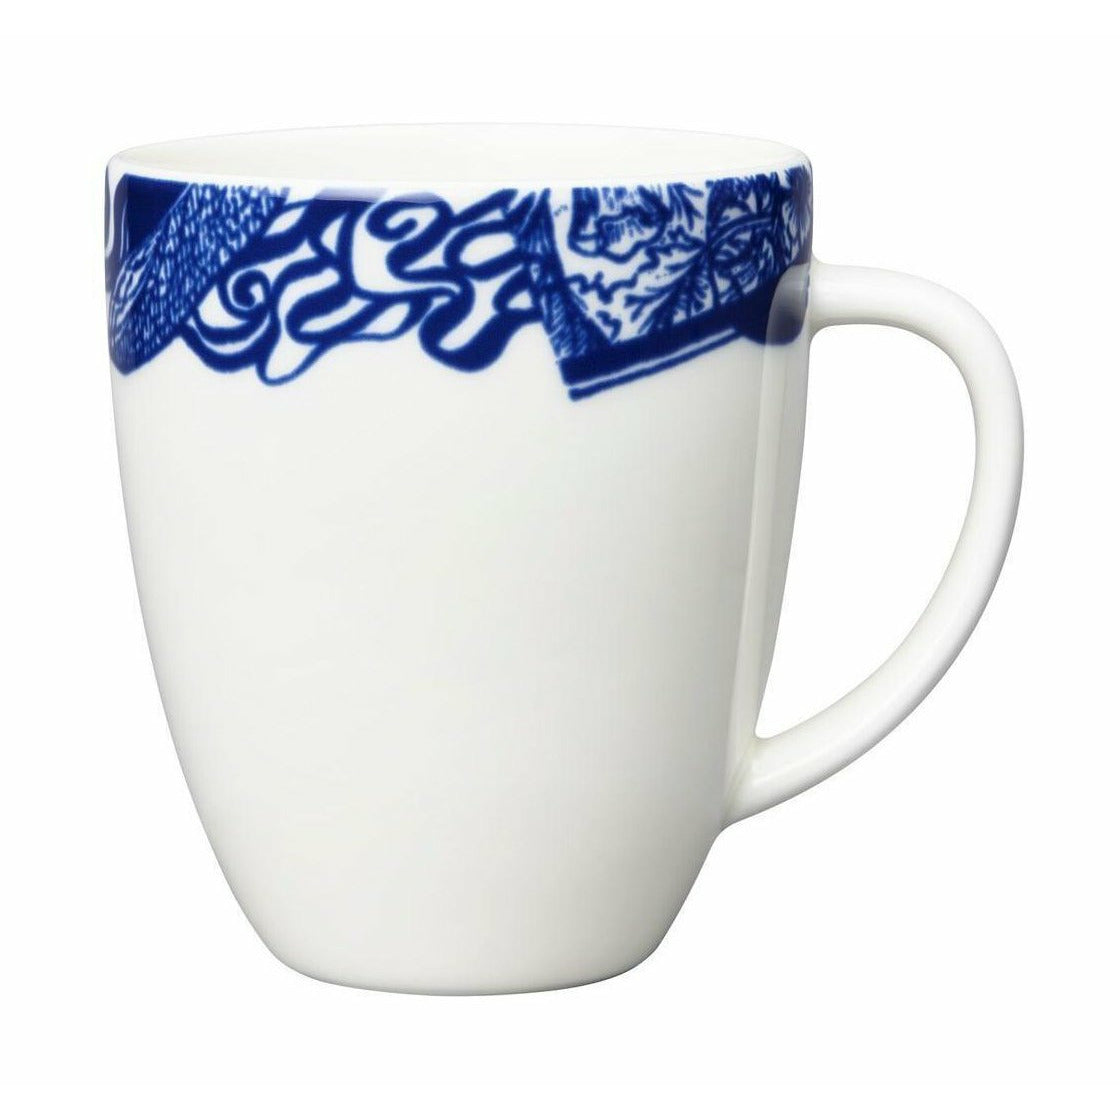 Arabia Pastoraali vaas 13 cm, wit/blauw